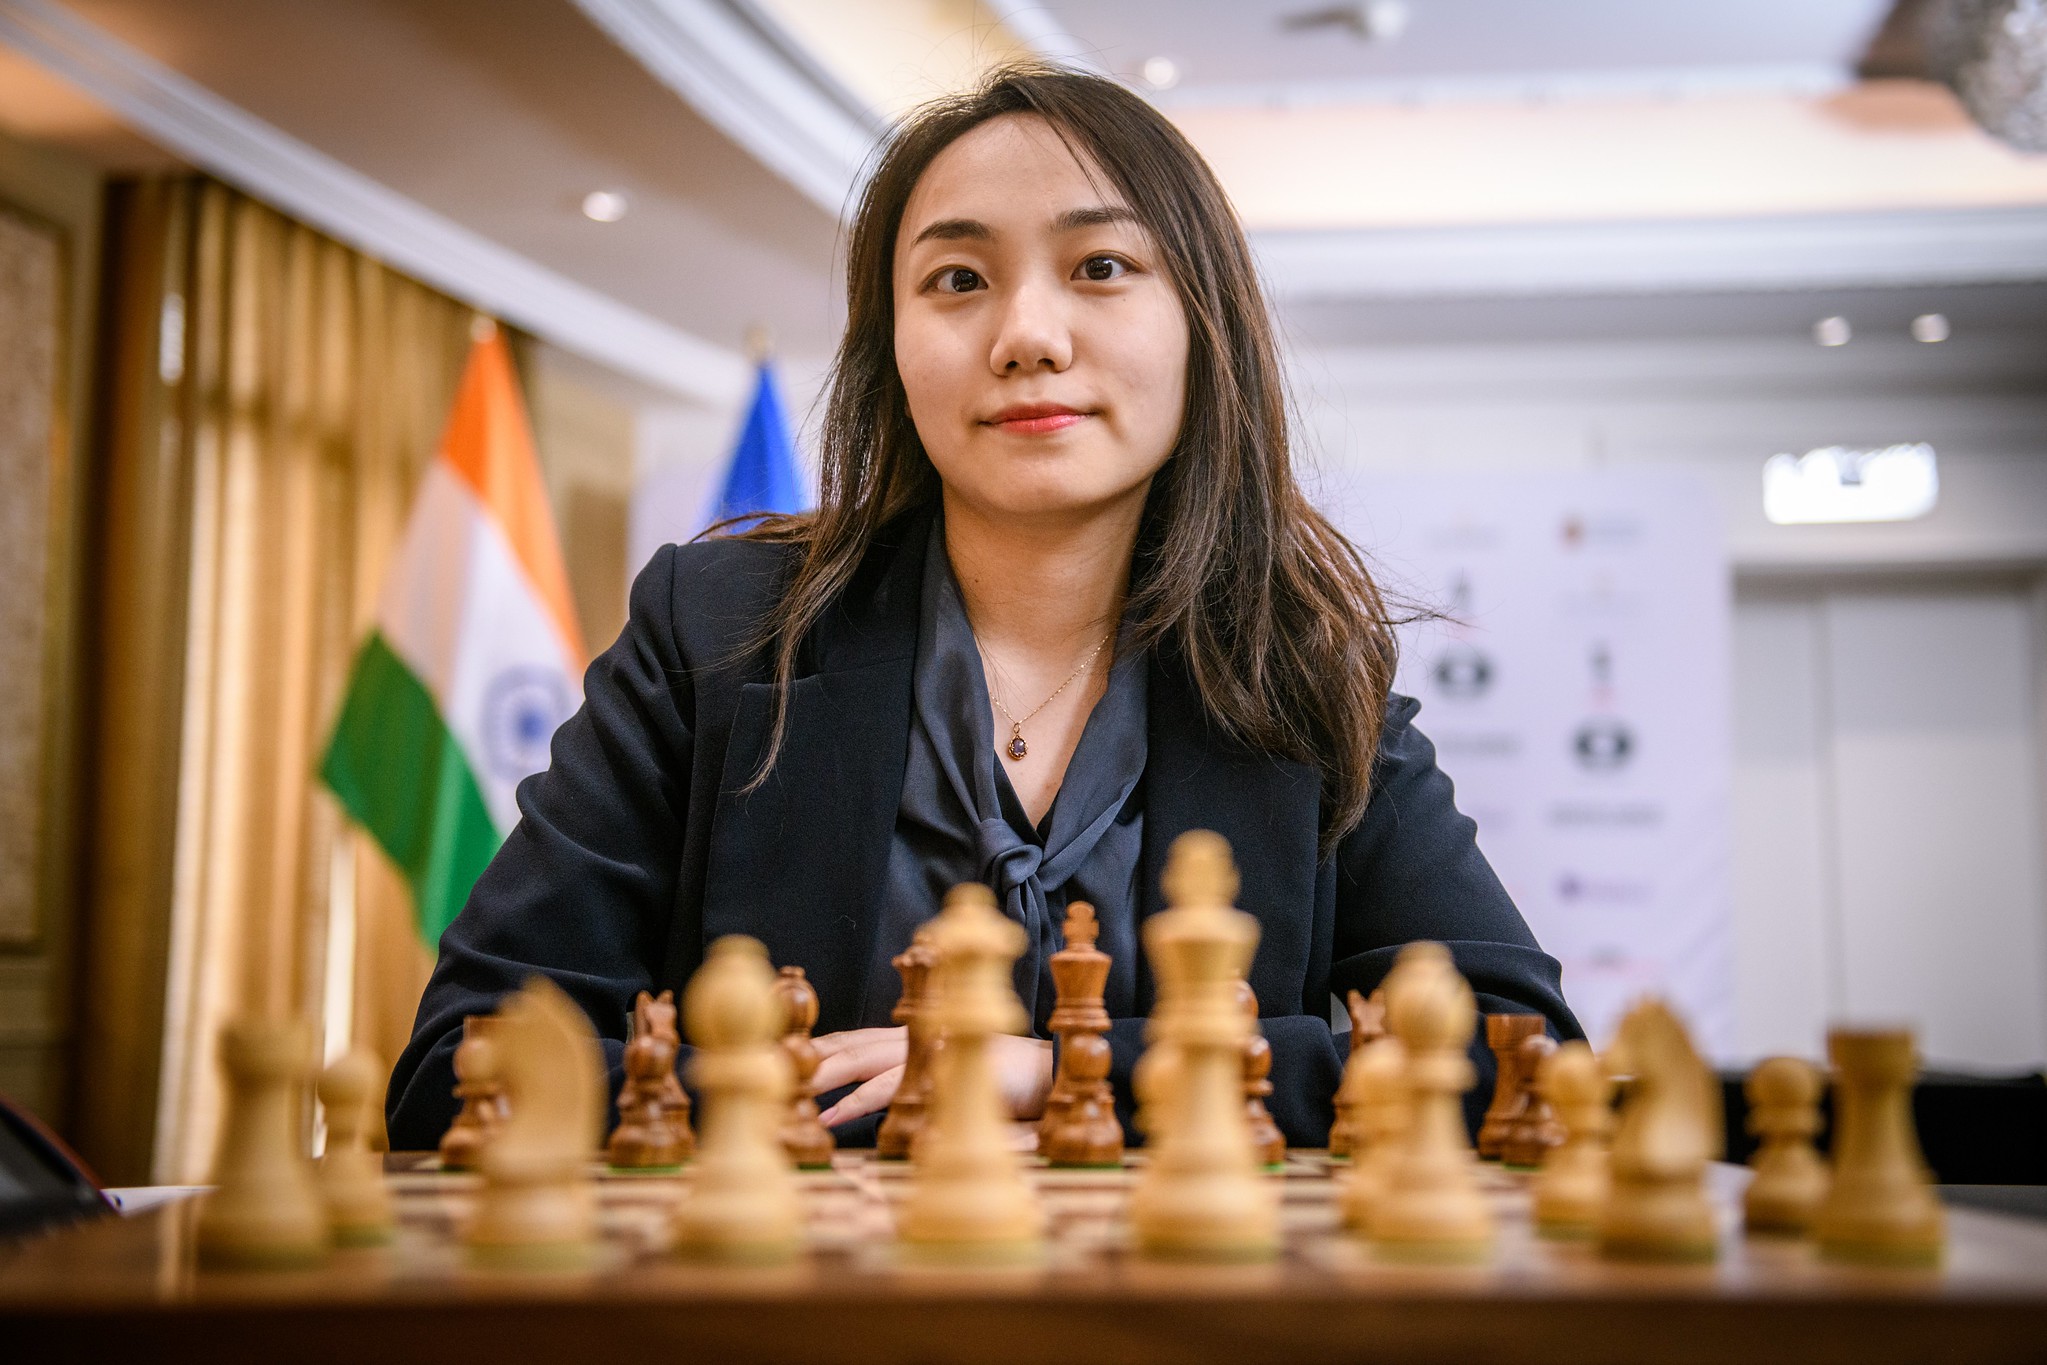 Lei Tingjie Beats Anna Muzychuk, Qualifies For Women's Candidates